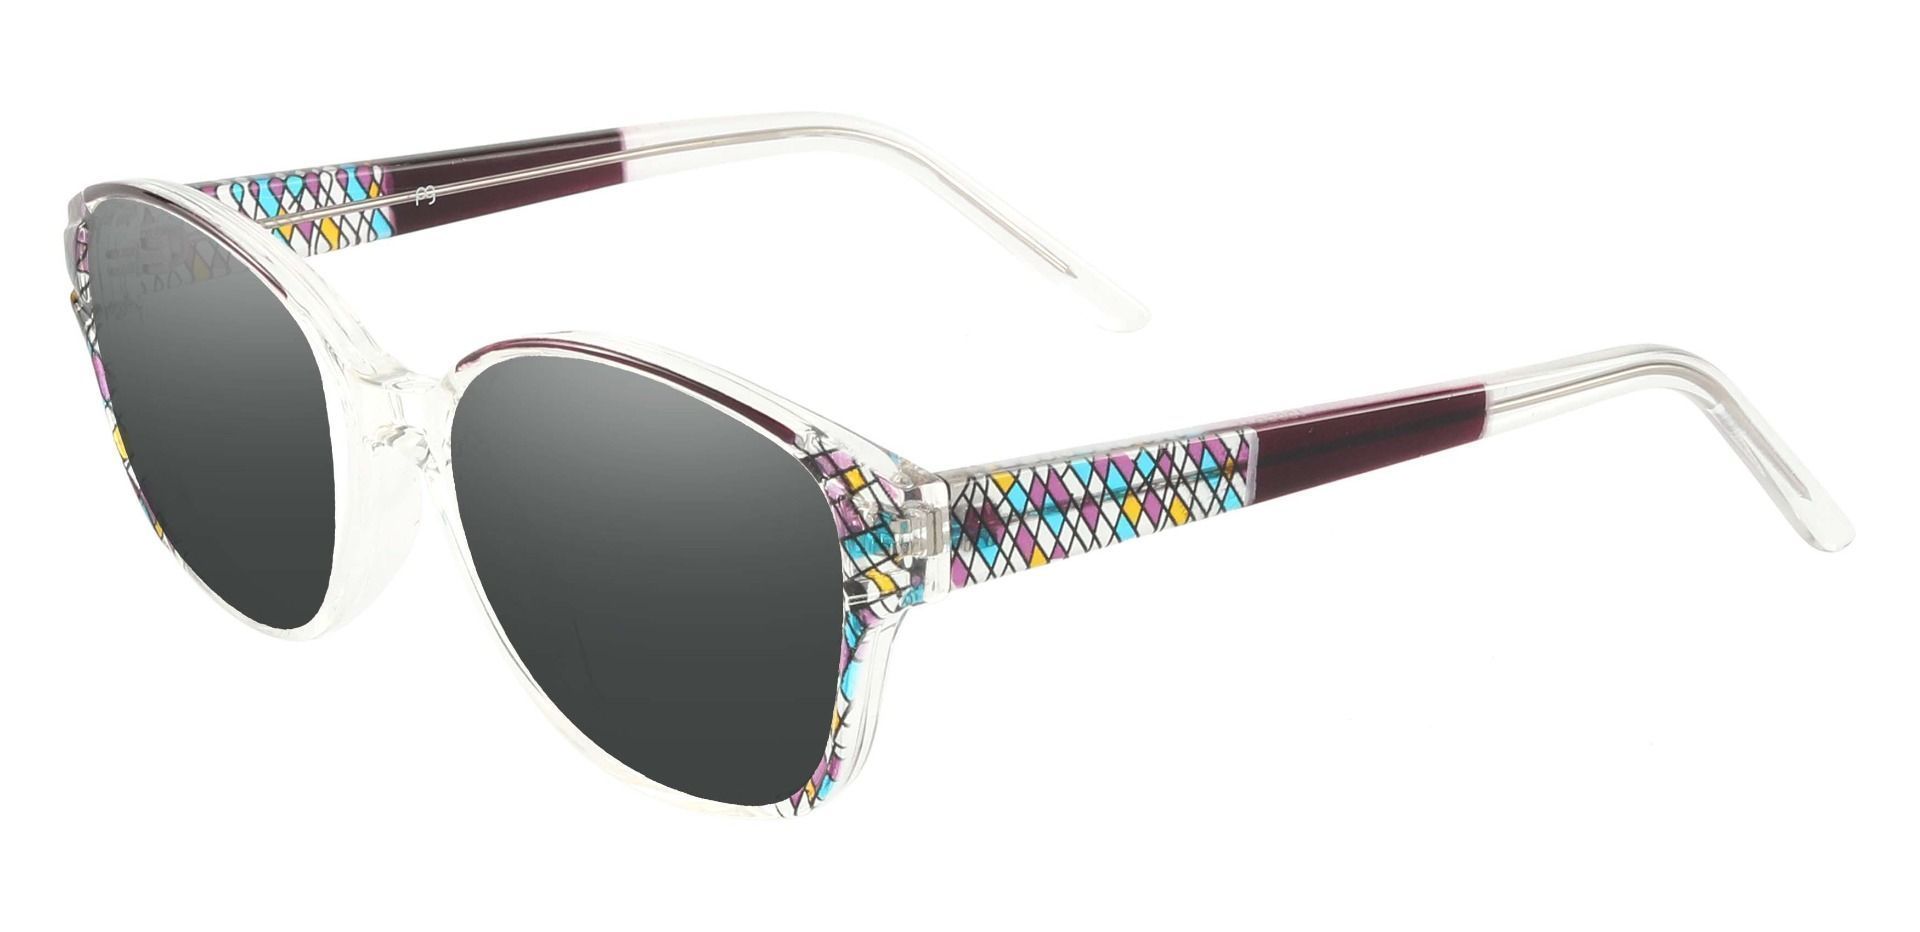 Moira Oval Prescription Sunglasses - Purple Frame With Gray Lenses